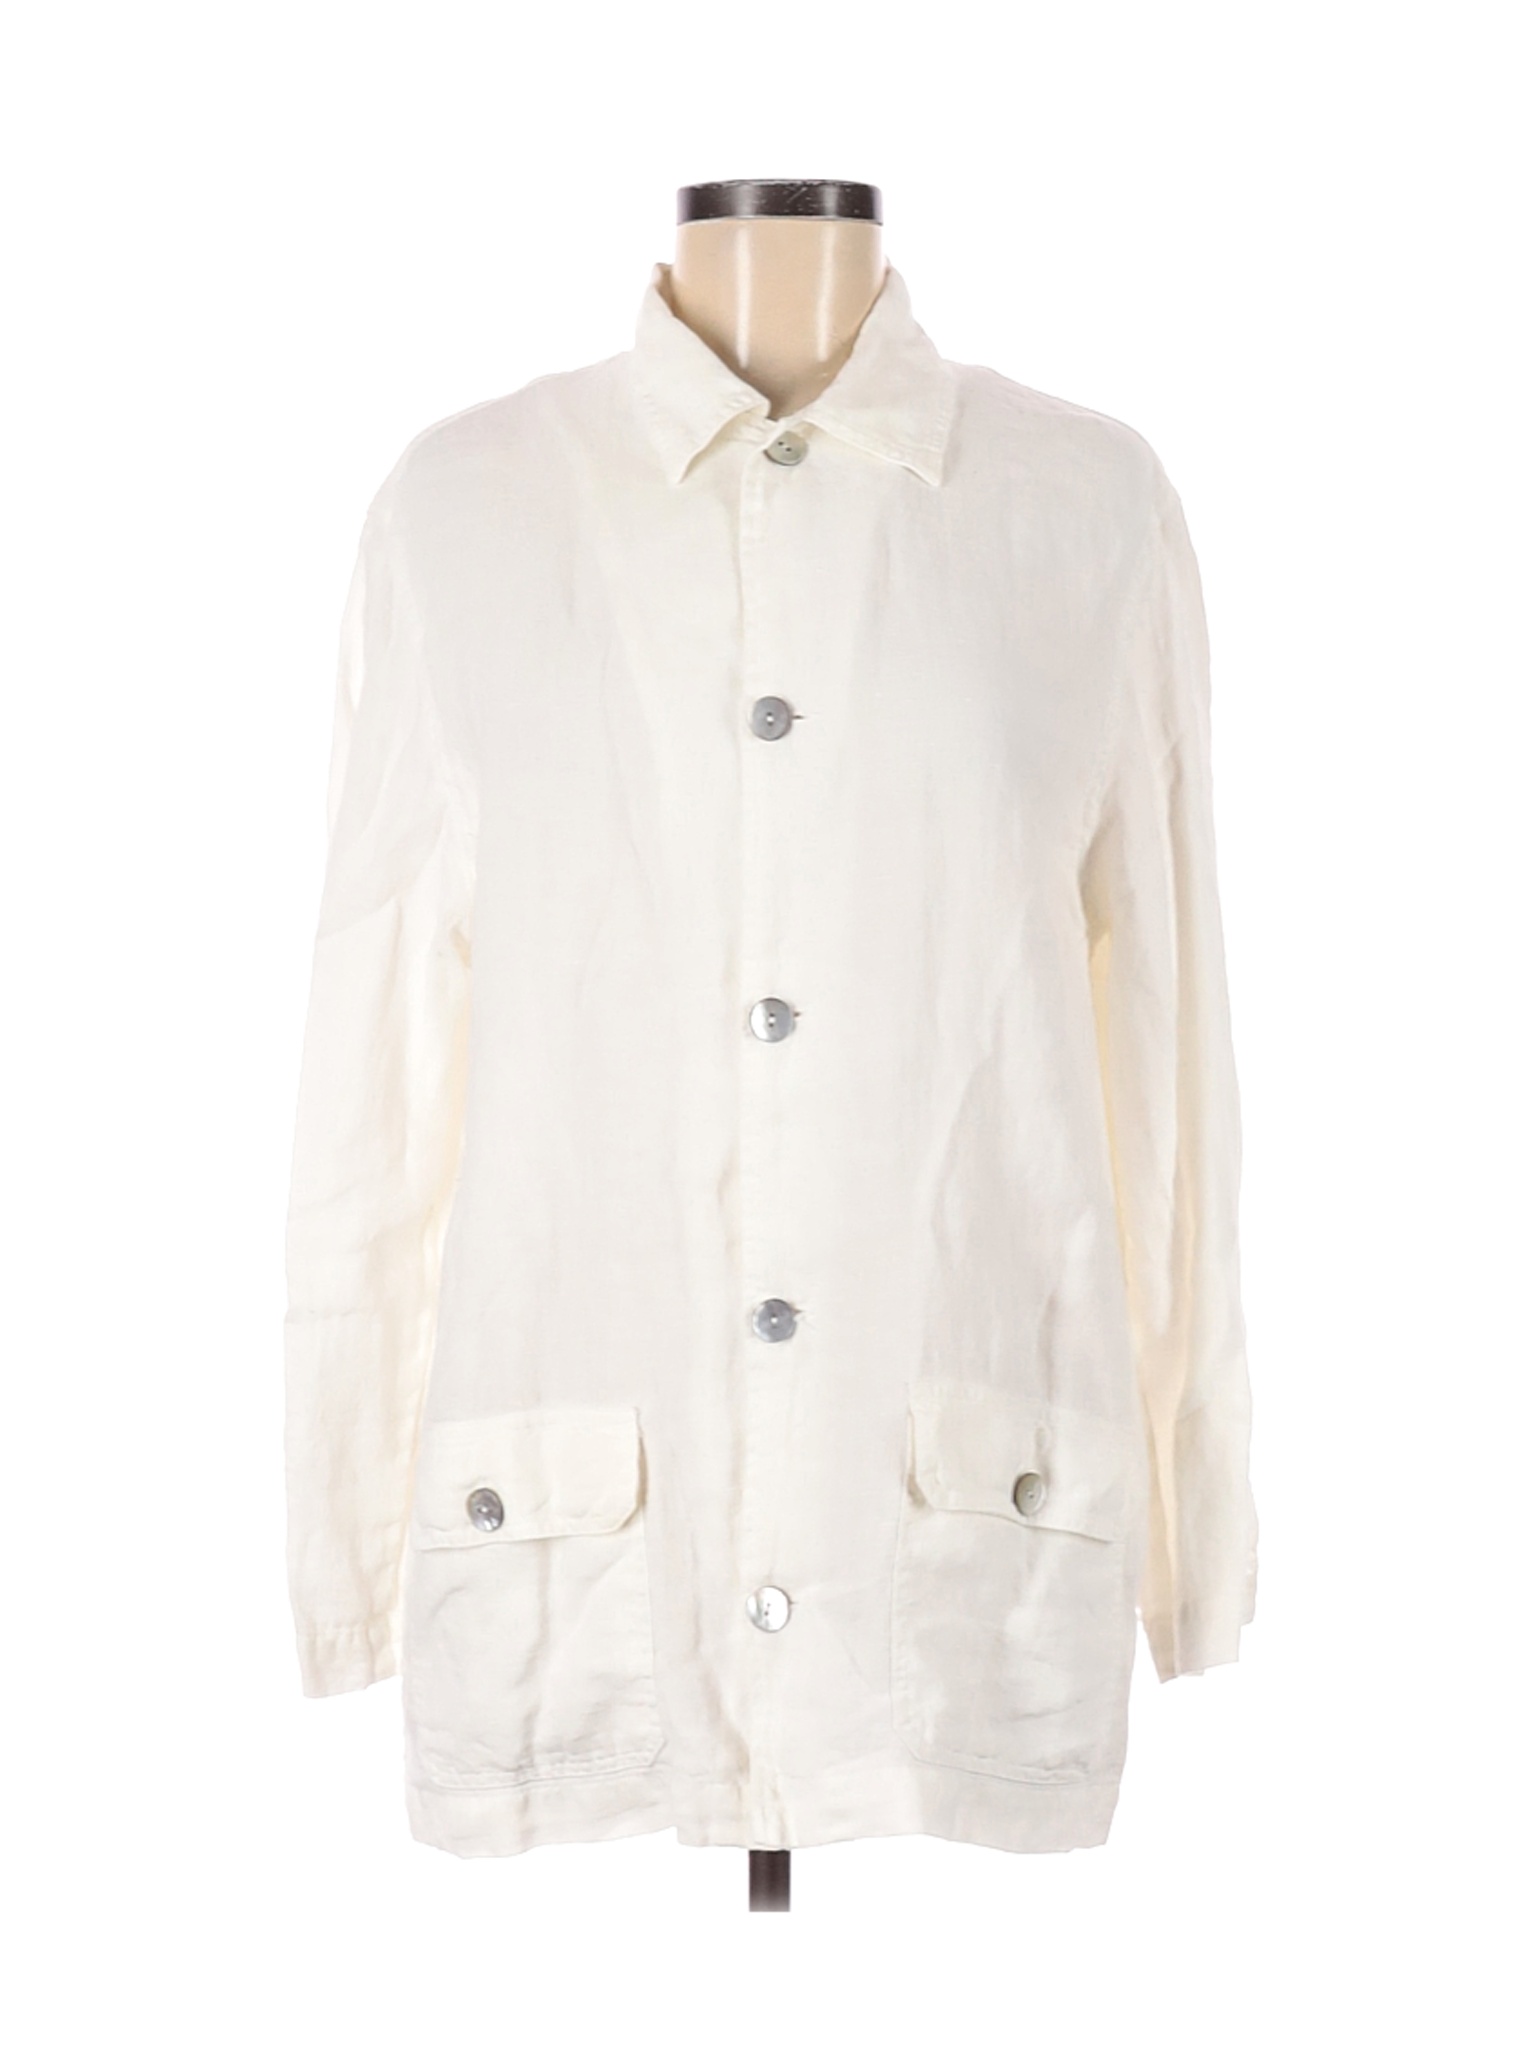 NWT A Gold E Women White Long Sleeve Button-Down Shirt M | eBay